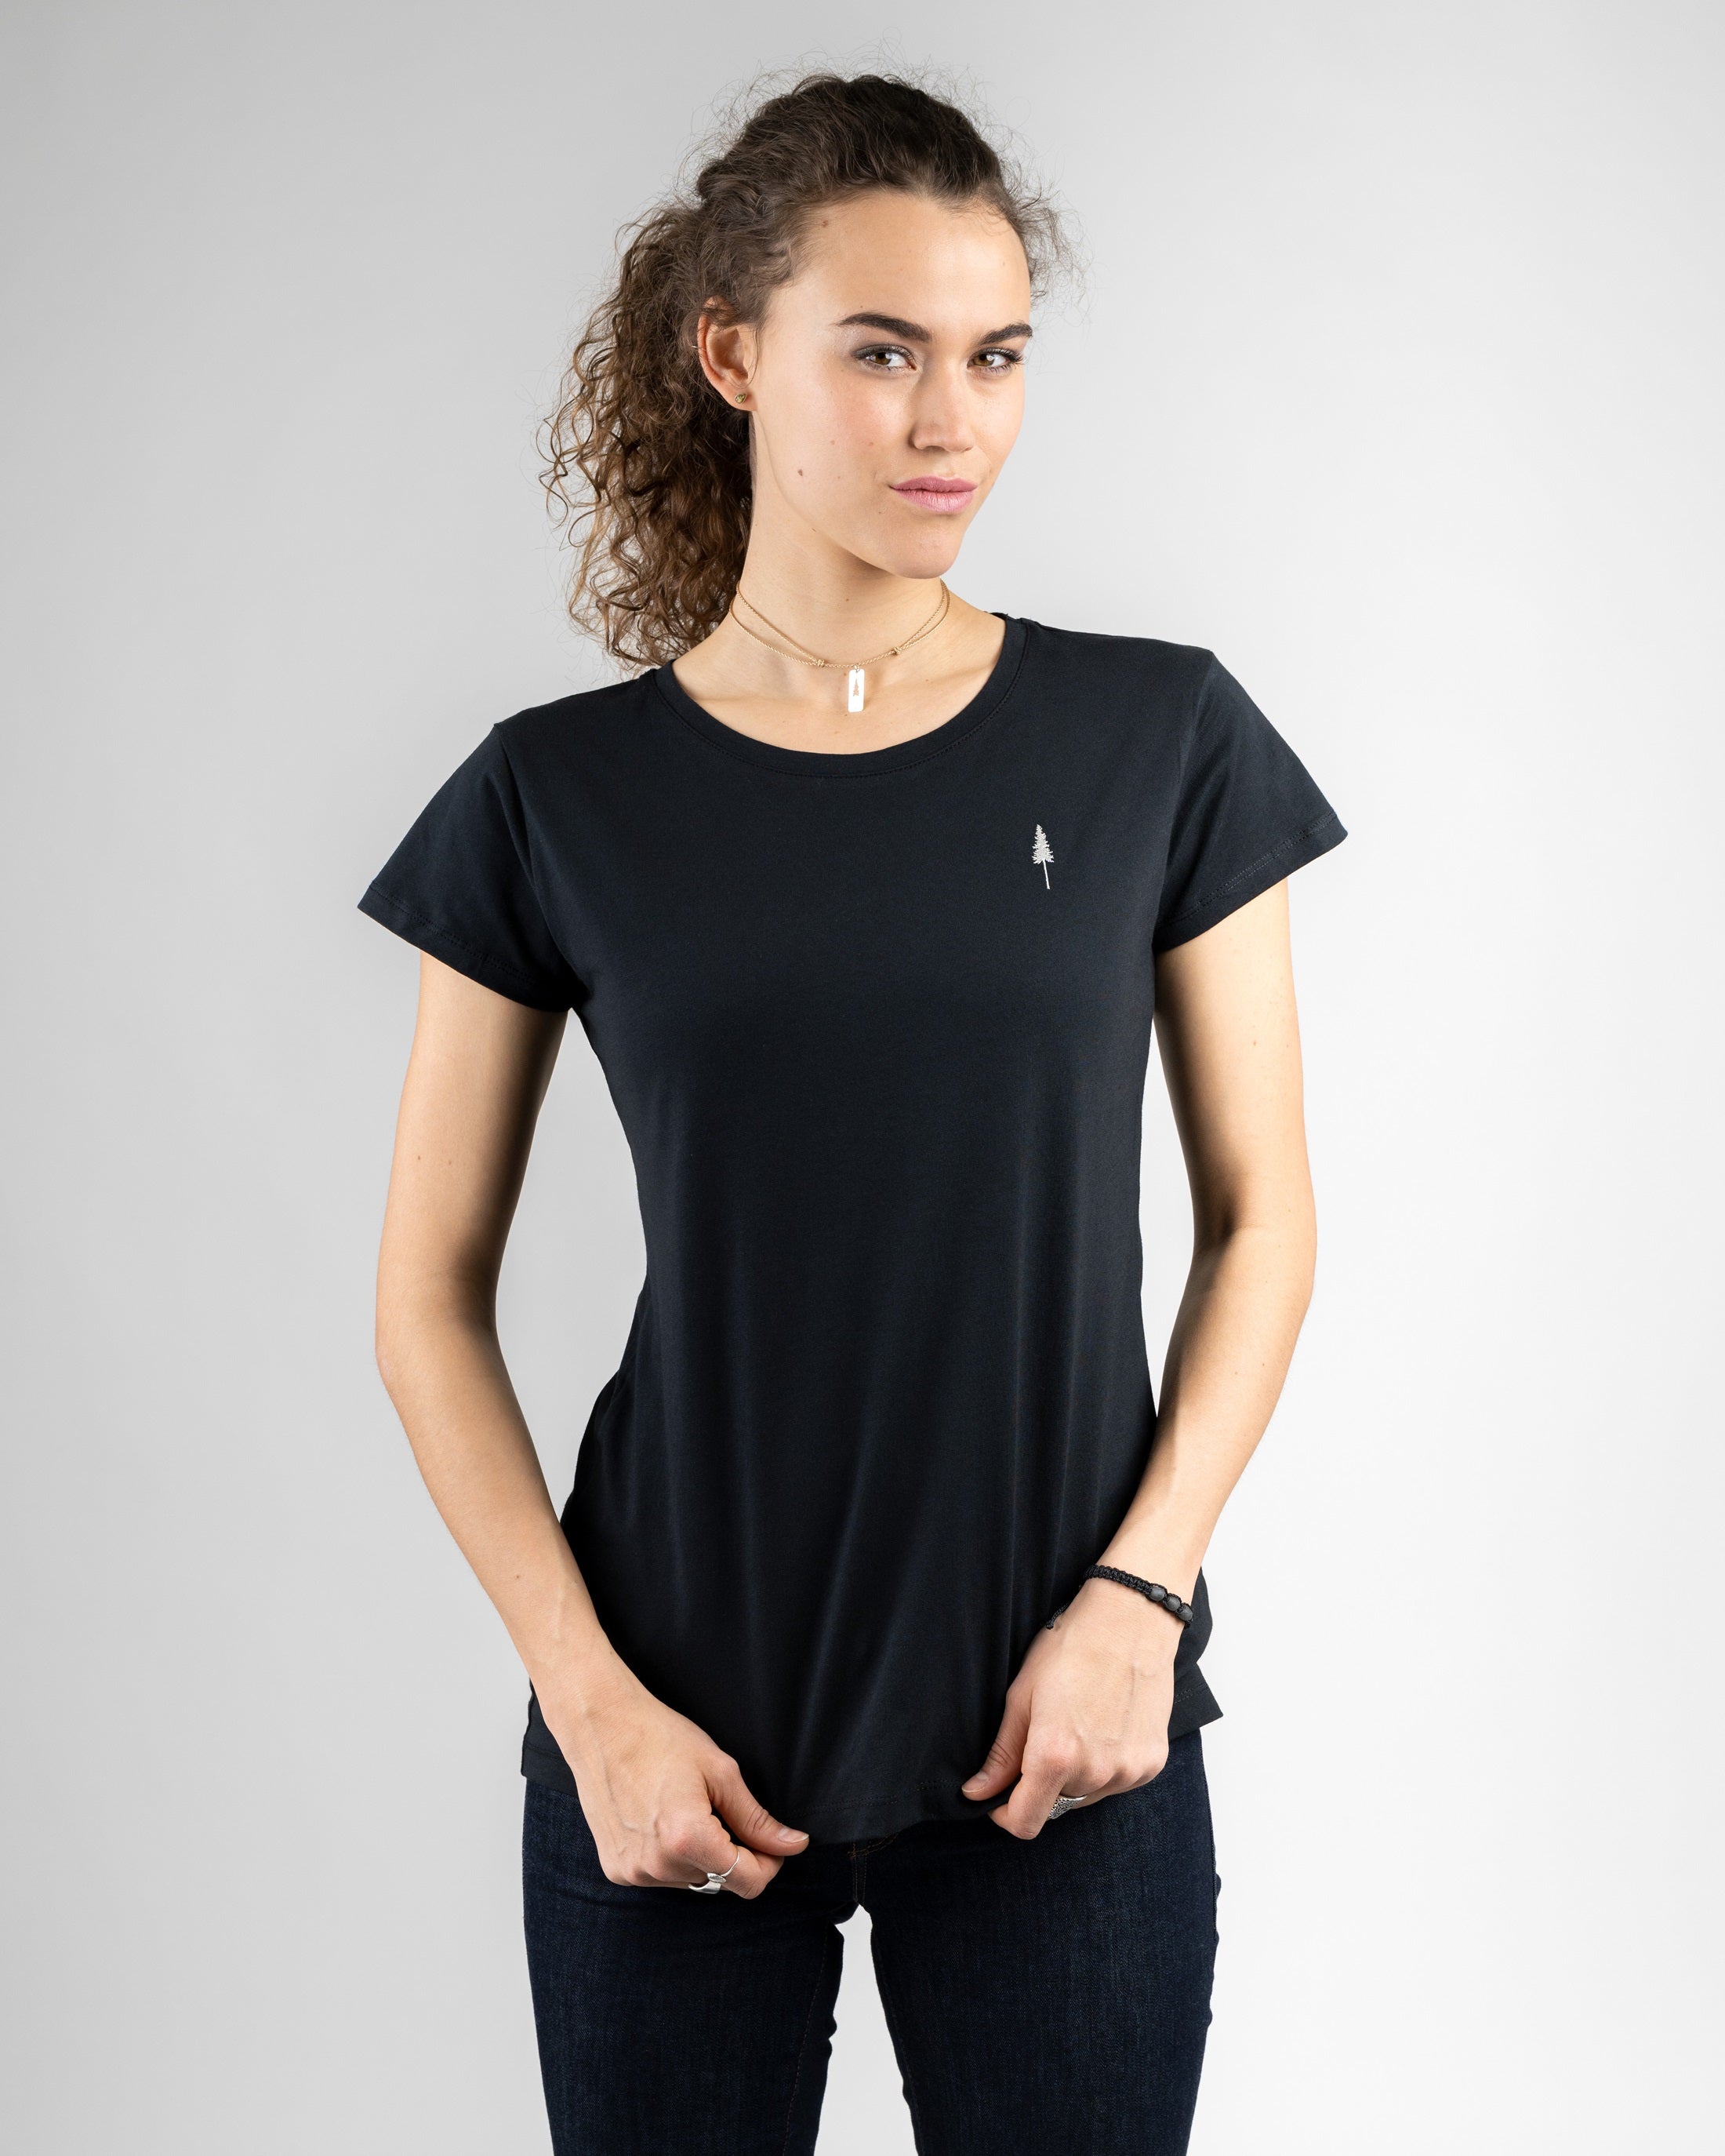 Women's organic cotton T-shirt Treeshirt Black